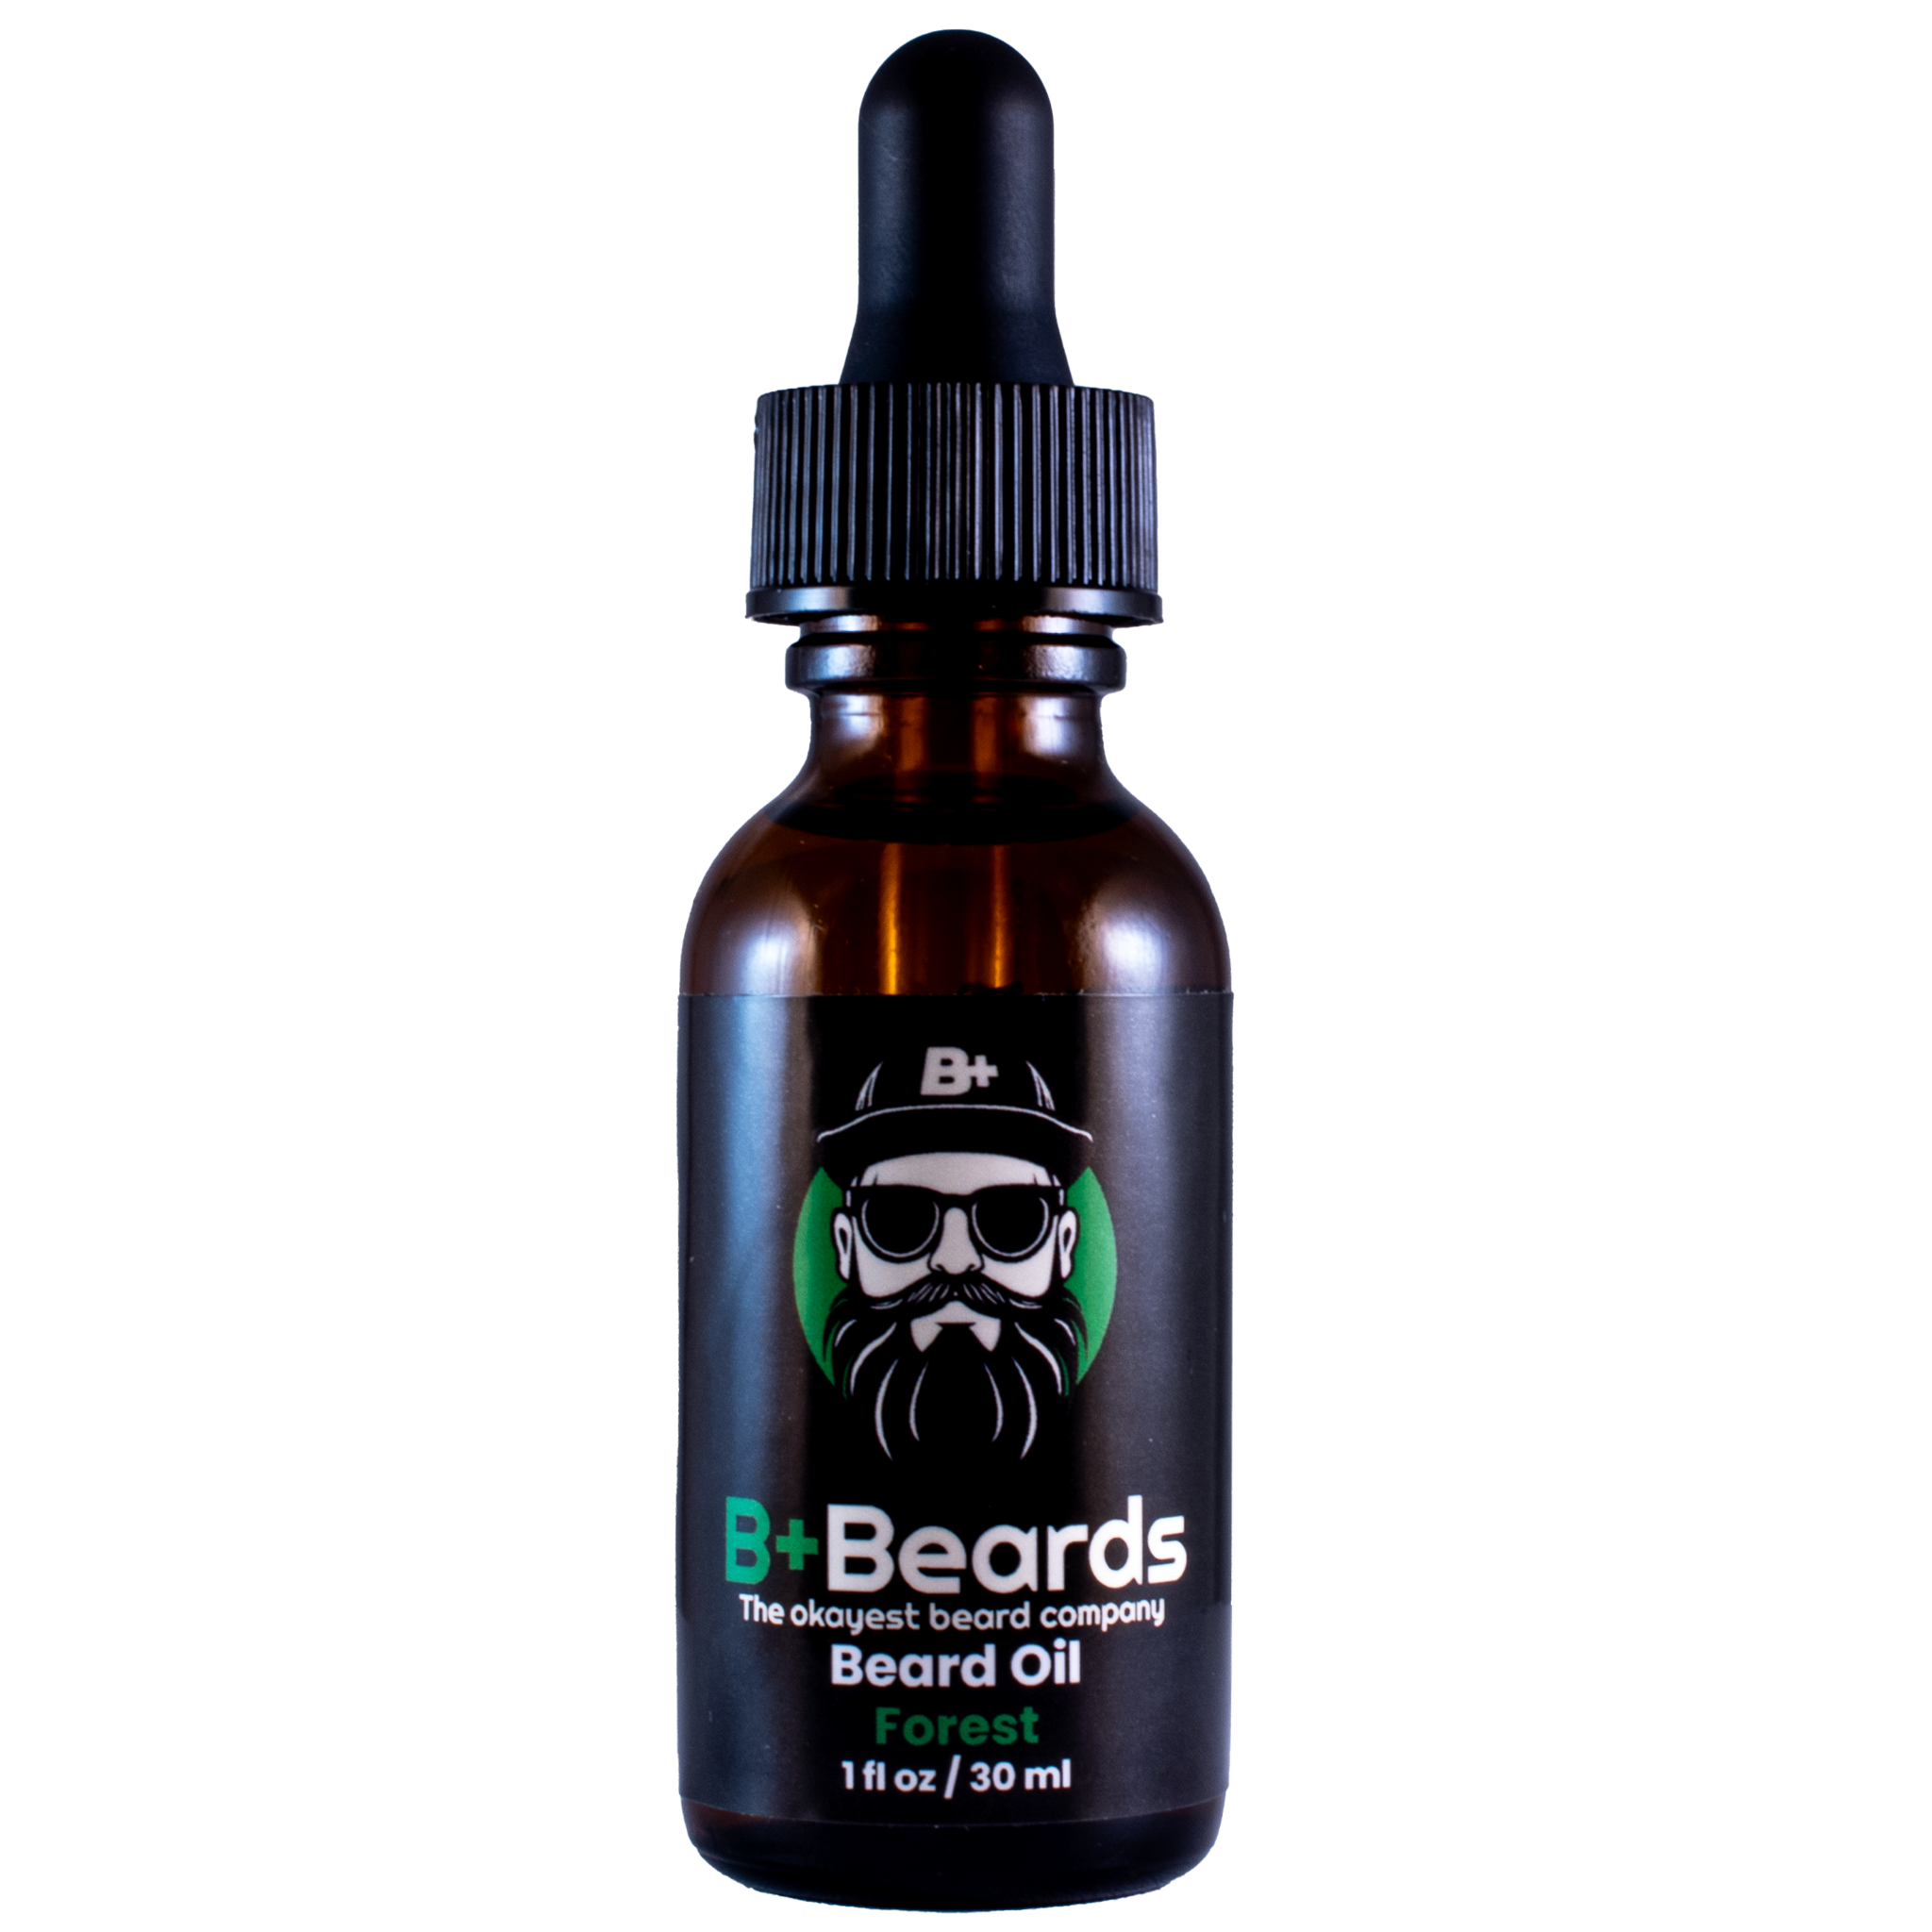 Forest Beard Oil